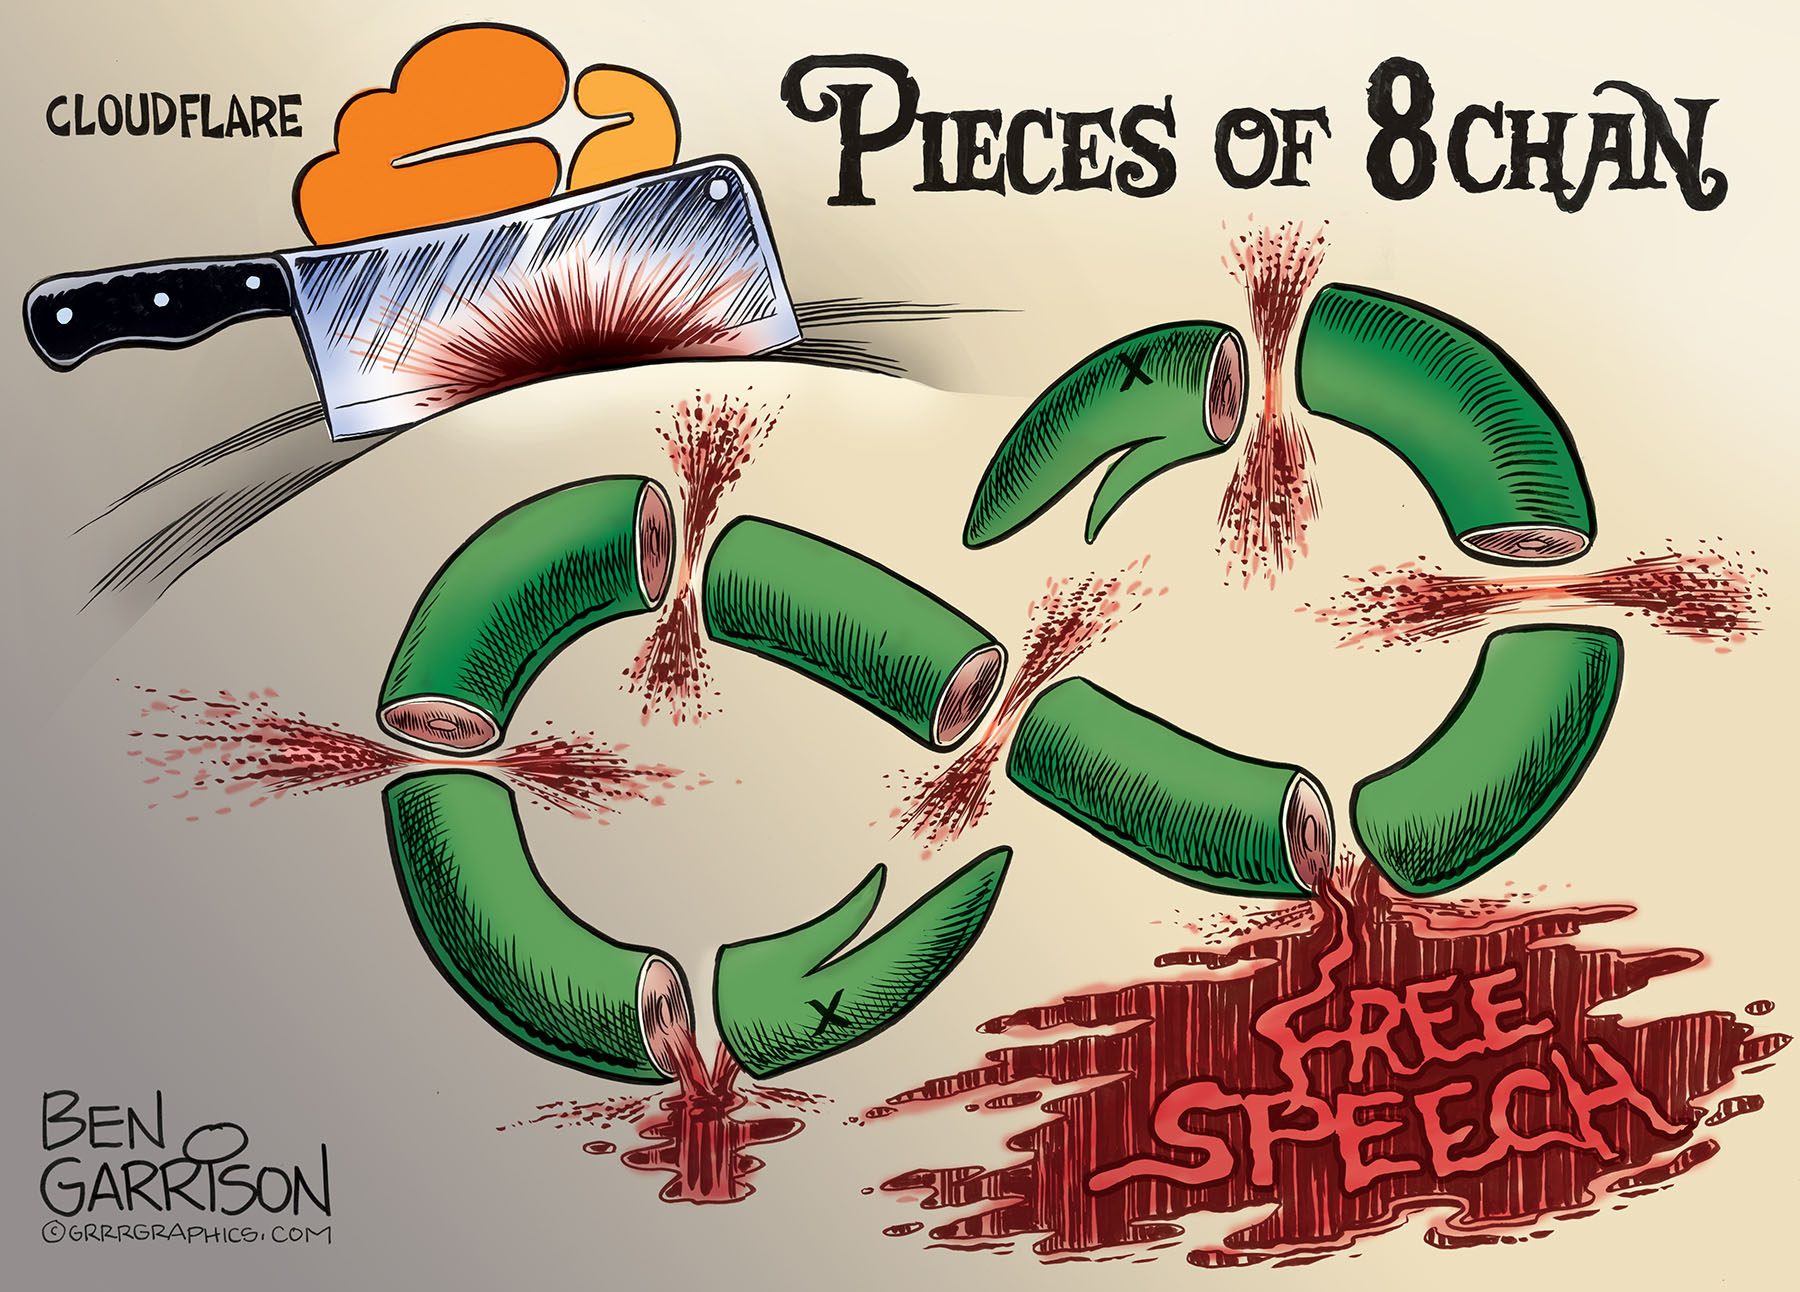 8chan_free_speech_cartoon.jpg